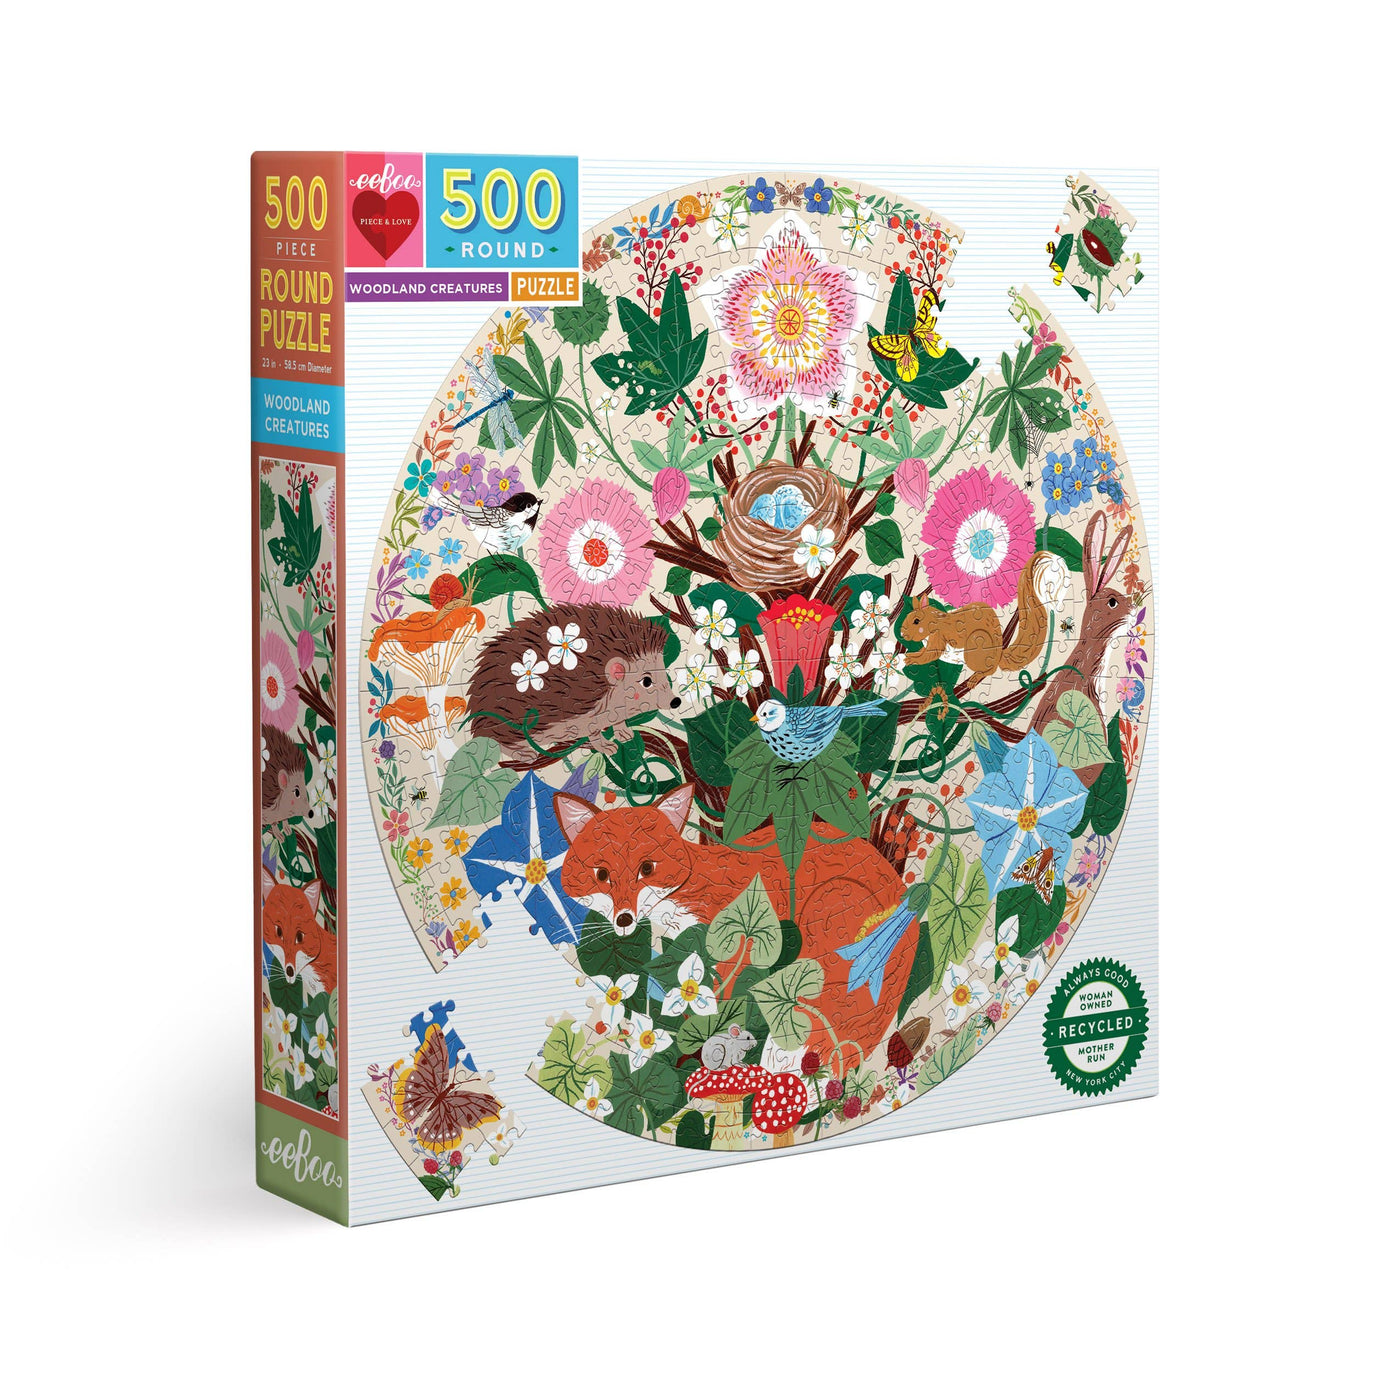 Woodland Creatures | 500 Piece Round Jigsaw Puzzle